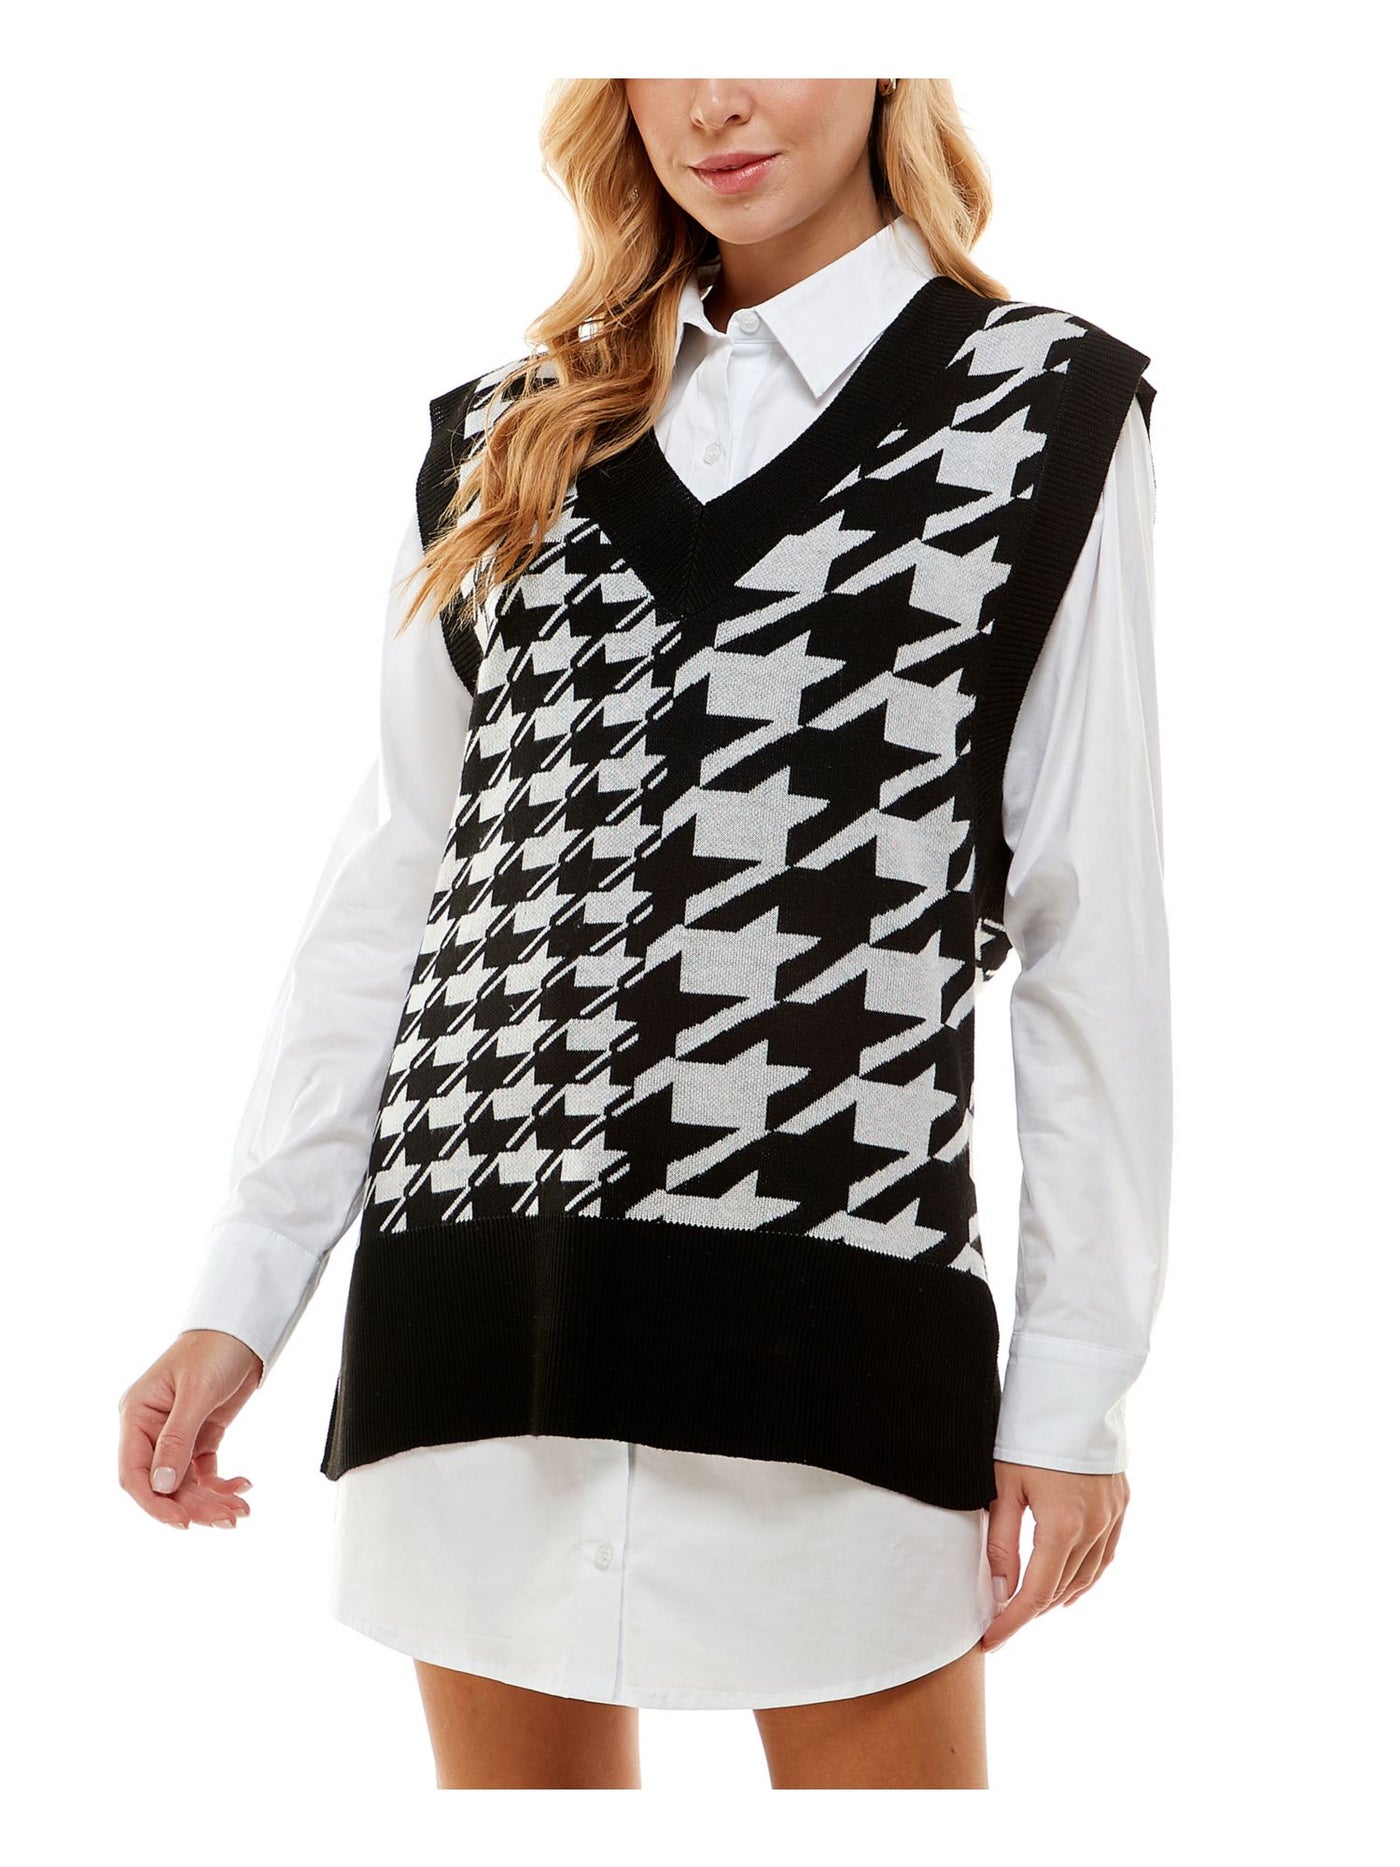 KINGSTON GREY Womens Black Houndstooth Cuffed Sleeve Collared Short Shirt Dress Juniors M